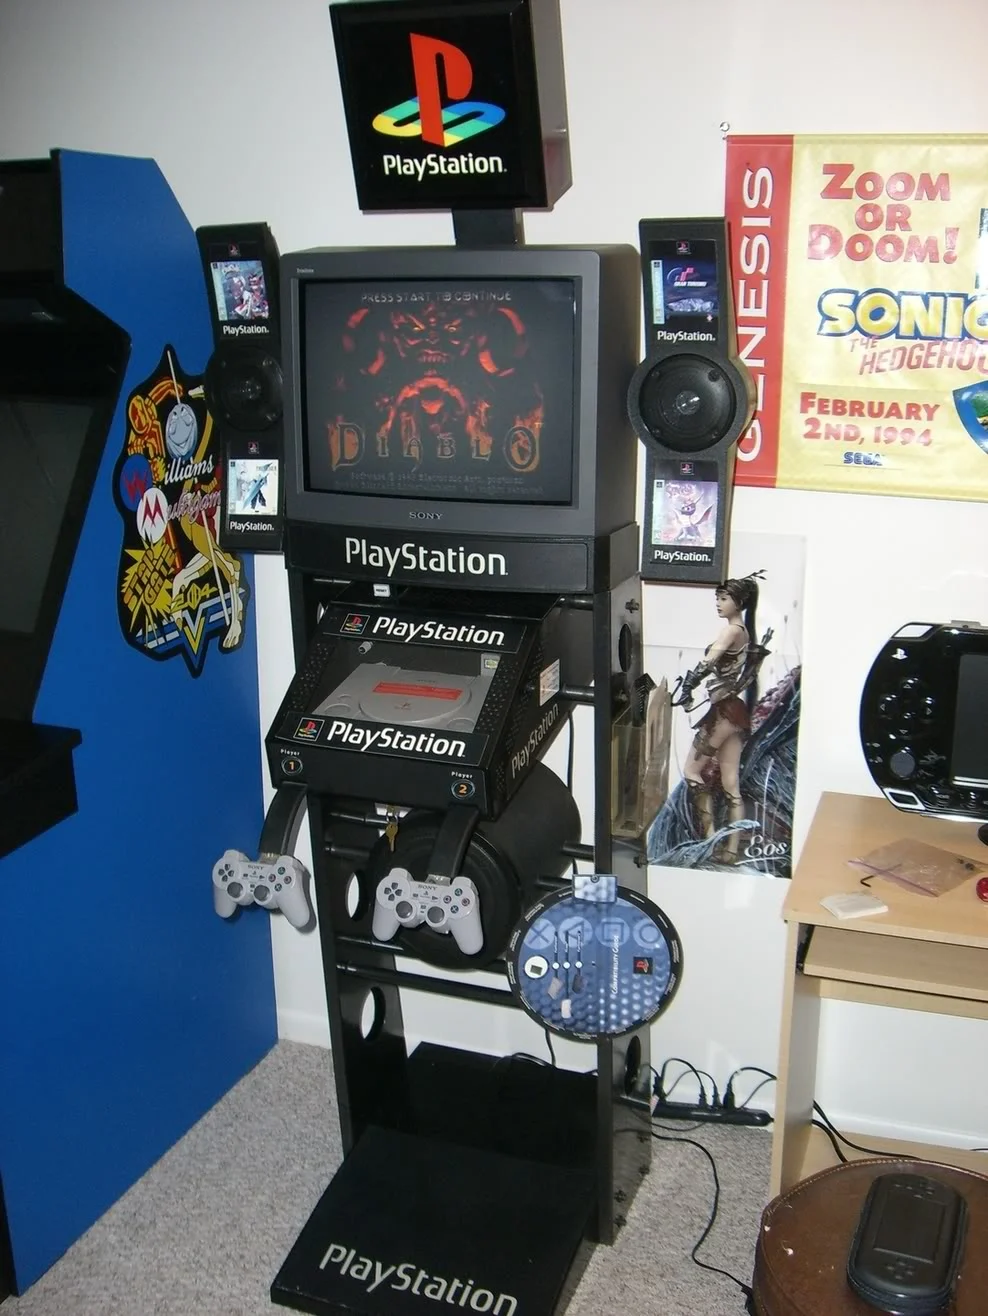  Sony Playstation Speaker Kiosk